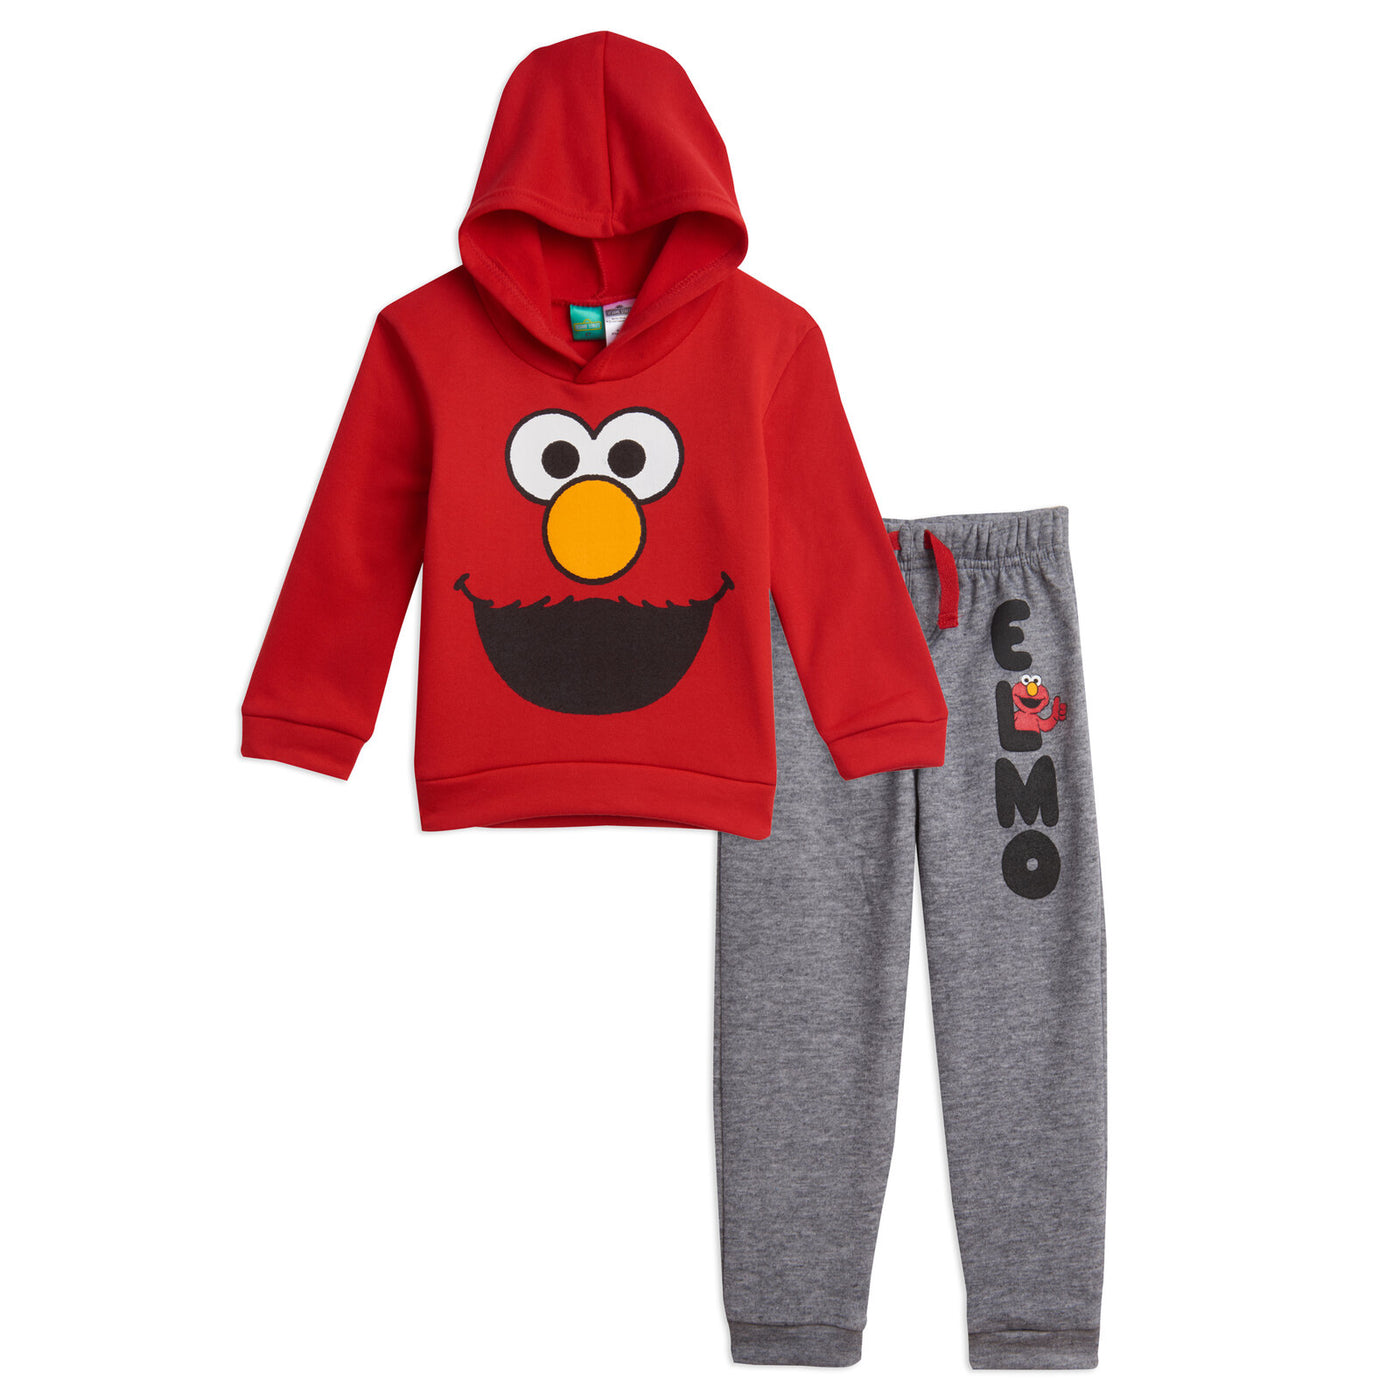 Sesame Street Elmo Hoodie and Pants Outfit Set